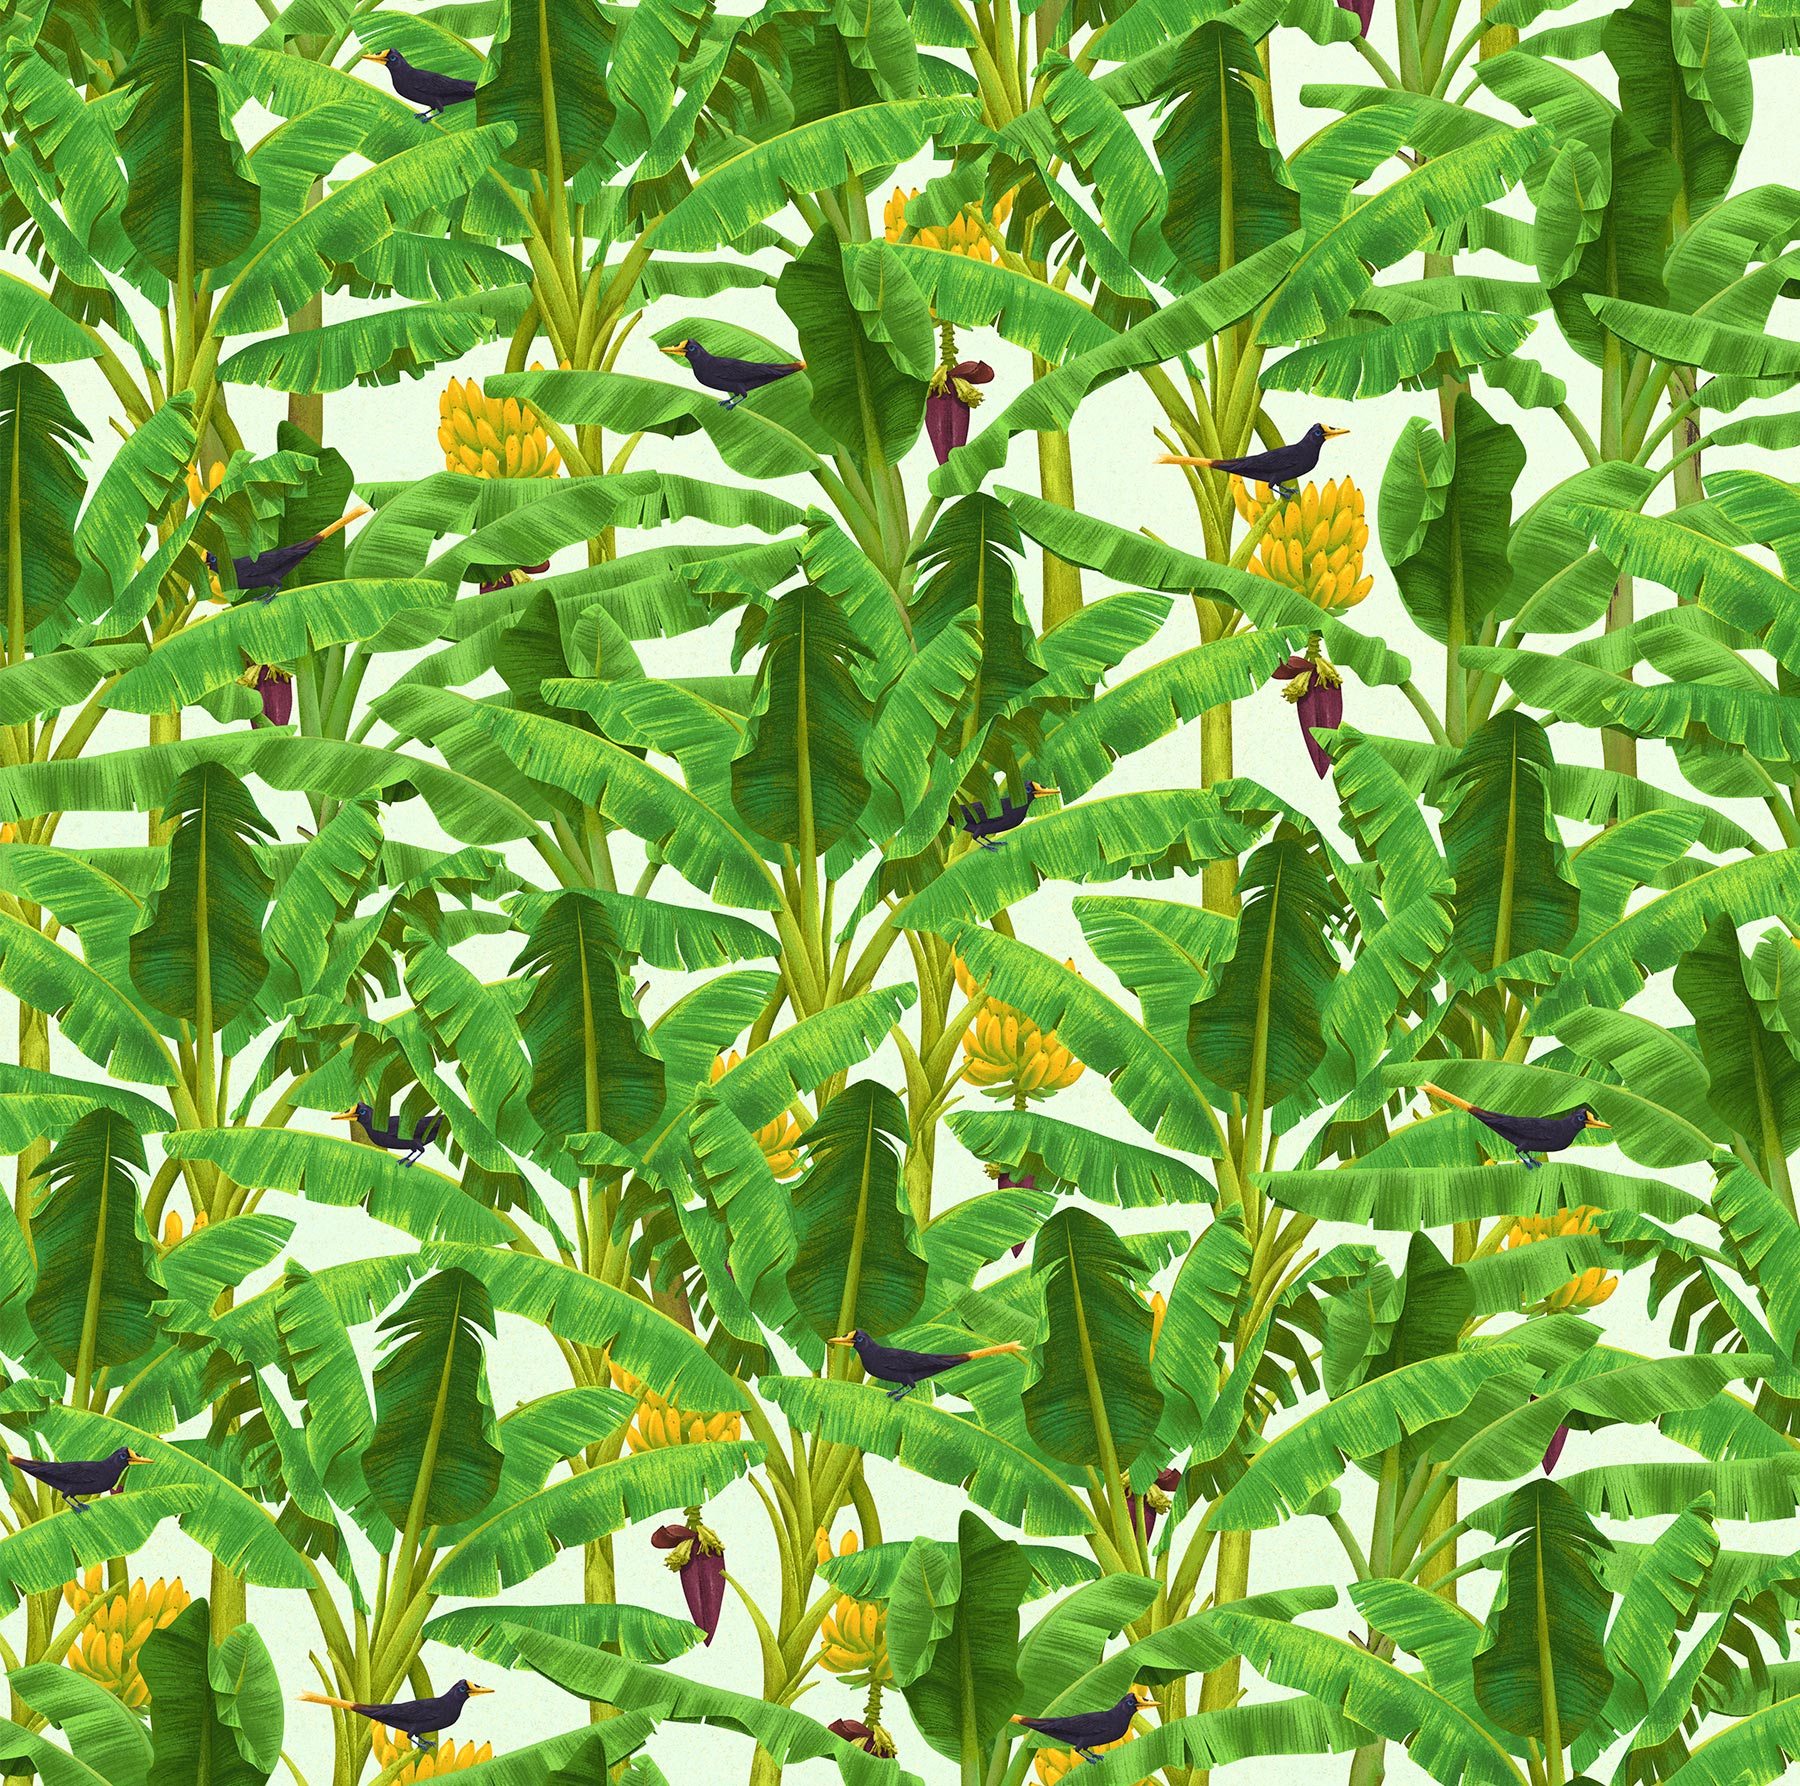 Bananiers & oiseaux, illustration